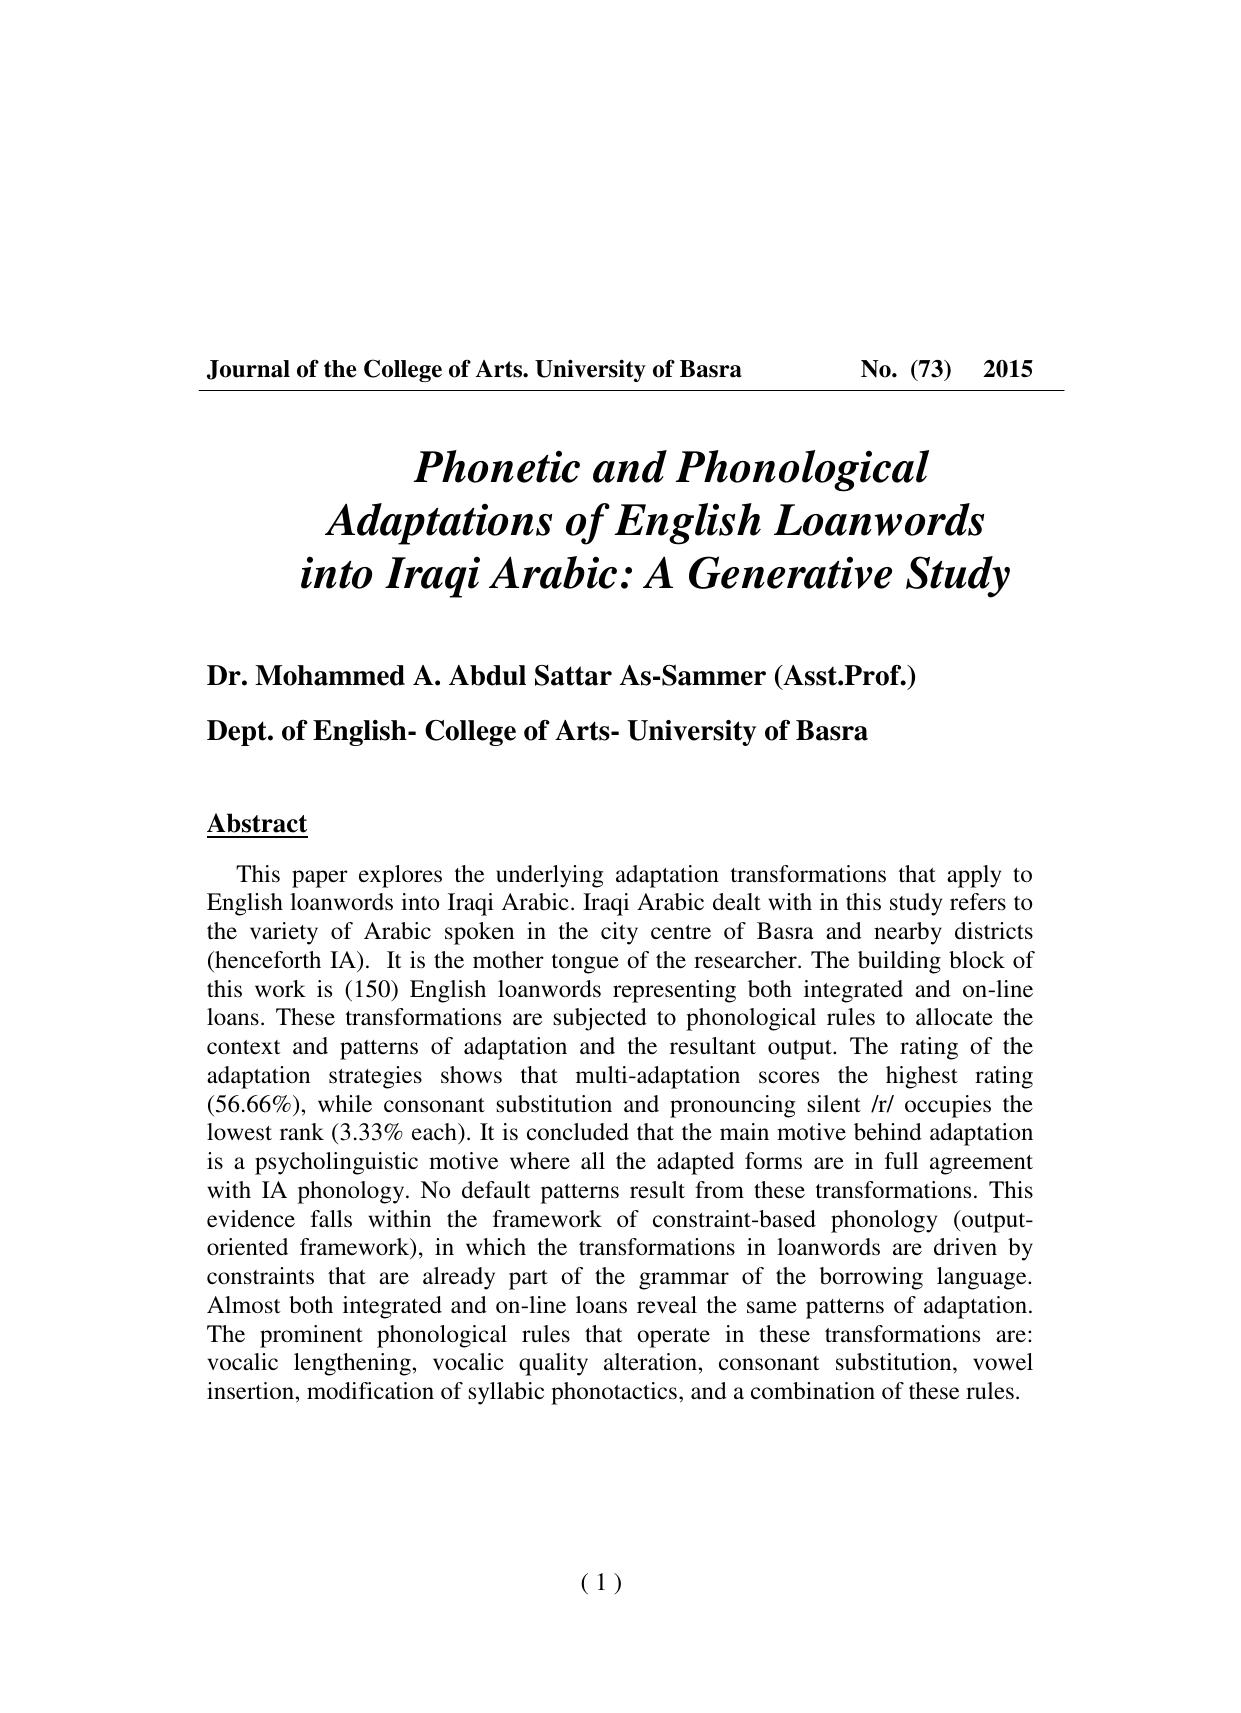 Phonetic and Phonological Adaptations of English Loanwords into Iraqi Arabic   2011